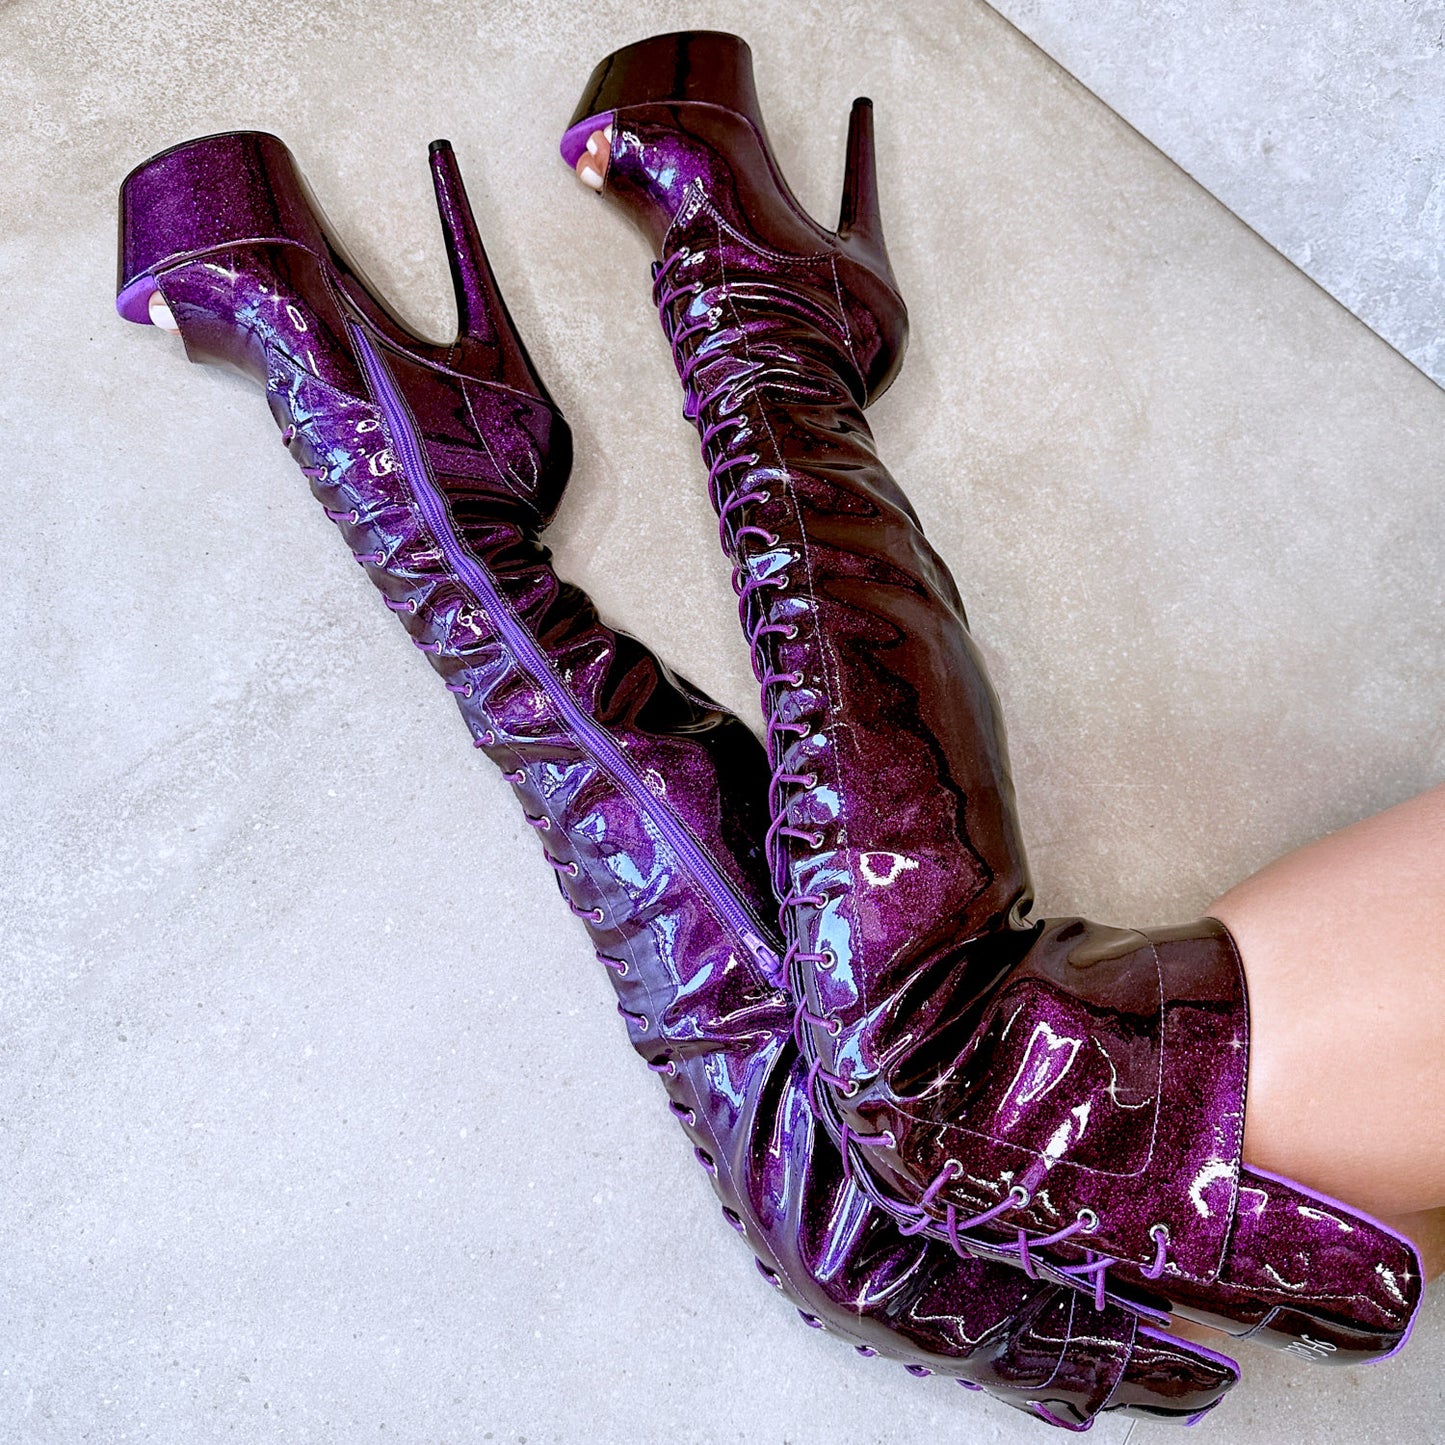 The Glitterati Thigh High Open Toe - Purple Rain - 7IN, stripper shoe, stripper heel, pole heel, not a pleaser, platform, dancer, pole dance, floor work